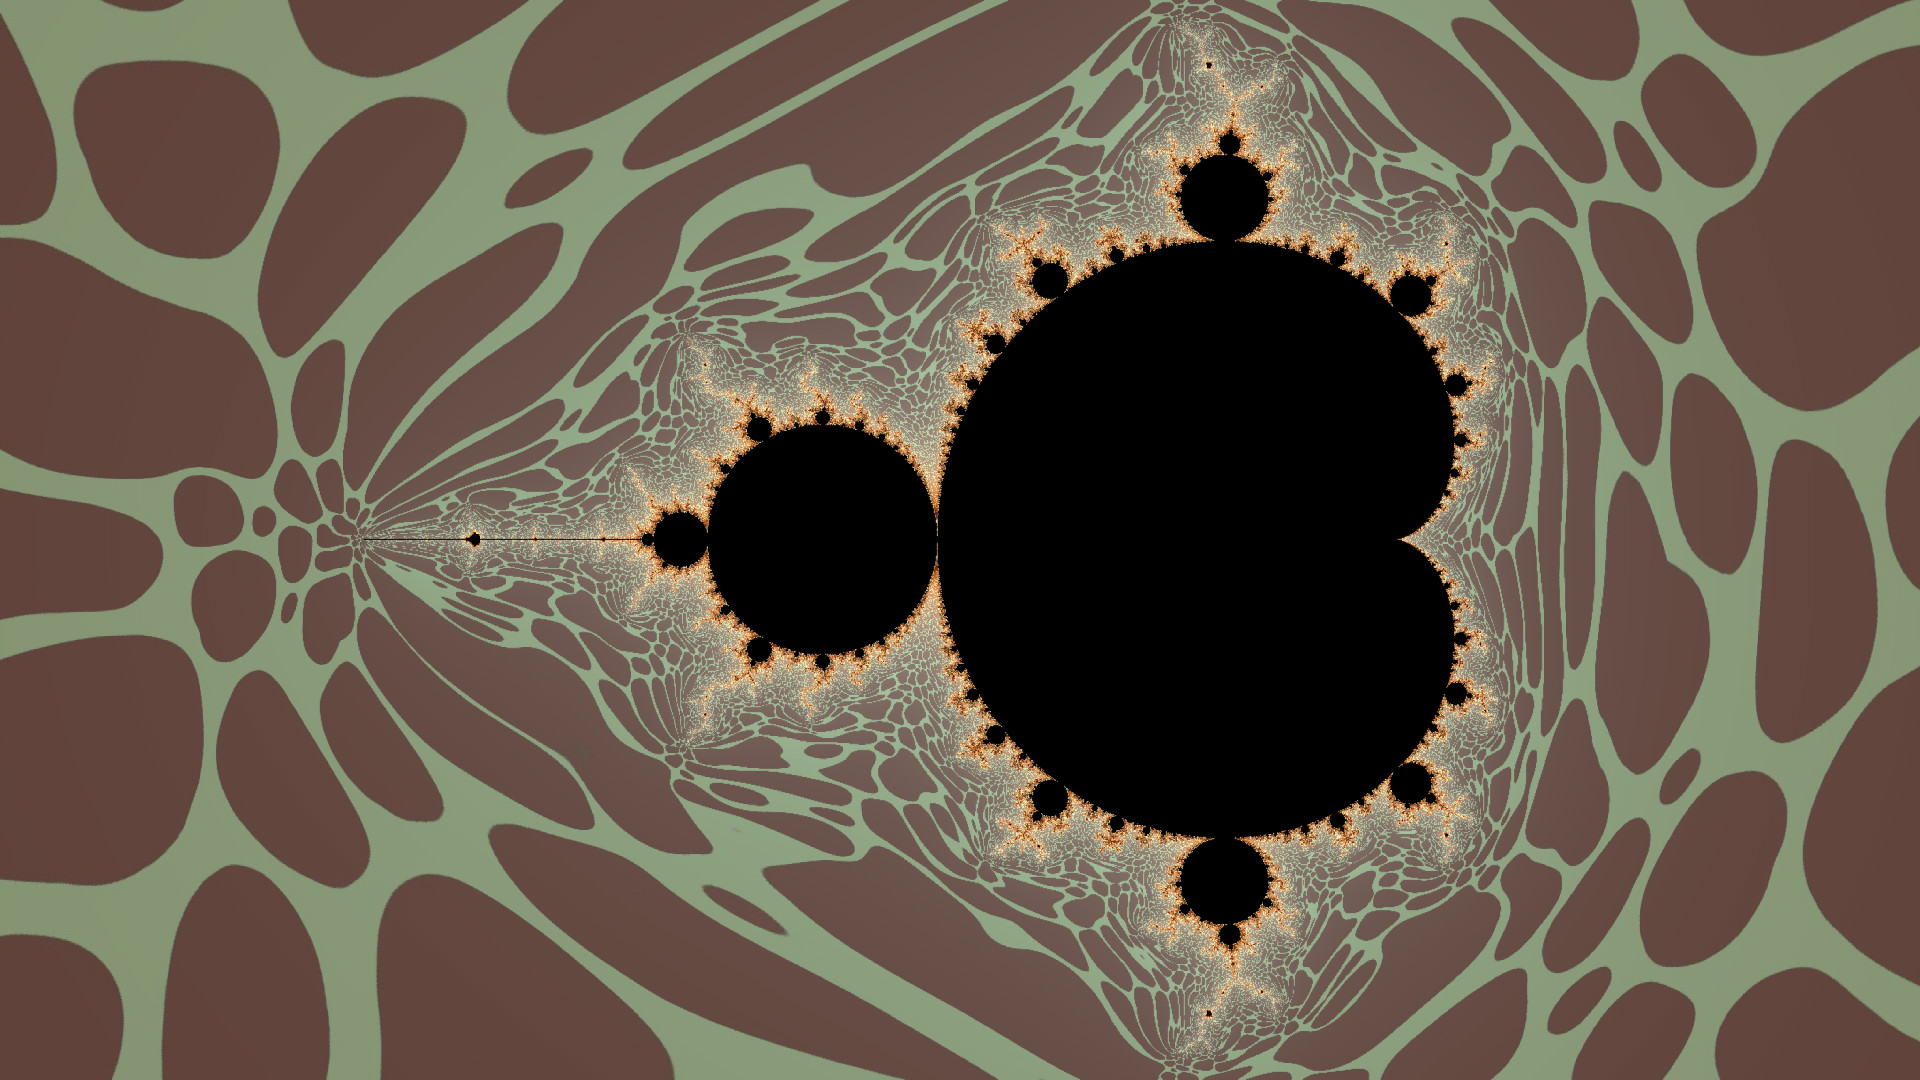 Textured Mandelbrot Image